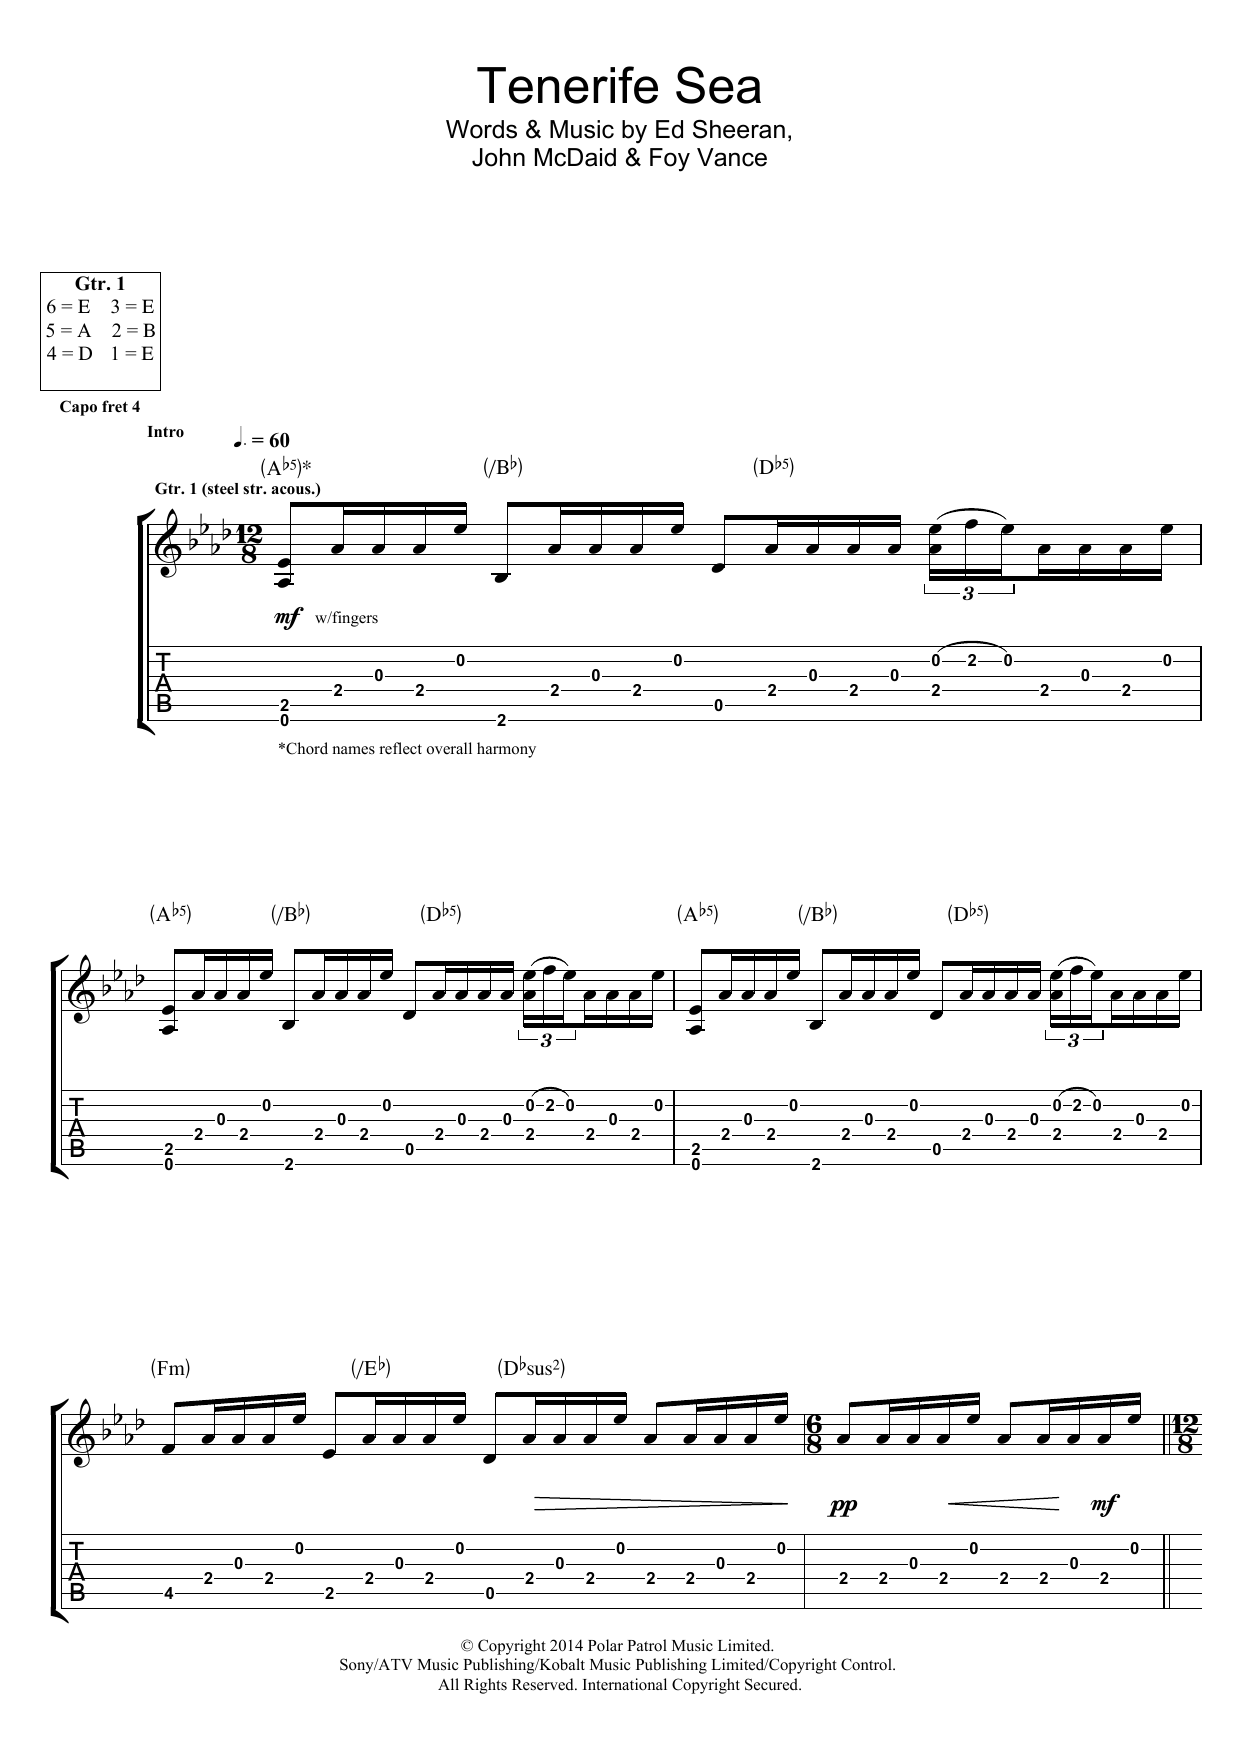 Download Ed Sheeran Tenerife Sea Sheet Music and learn how to play Easy Guitar Tab PDF digital score in minutes